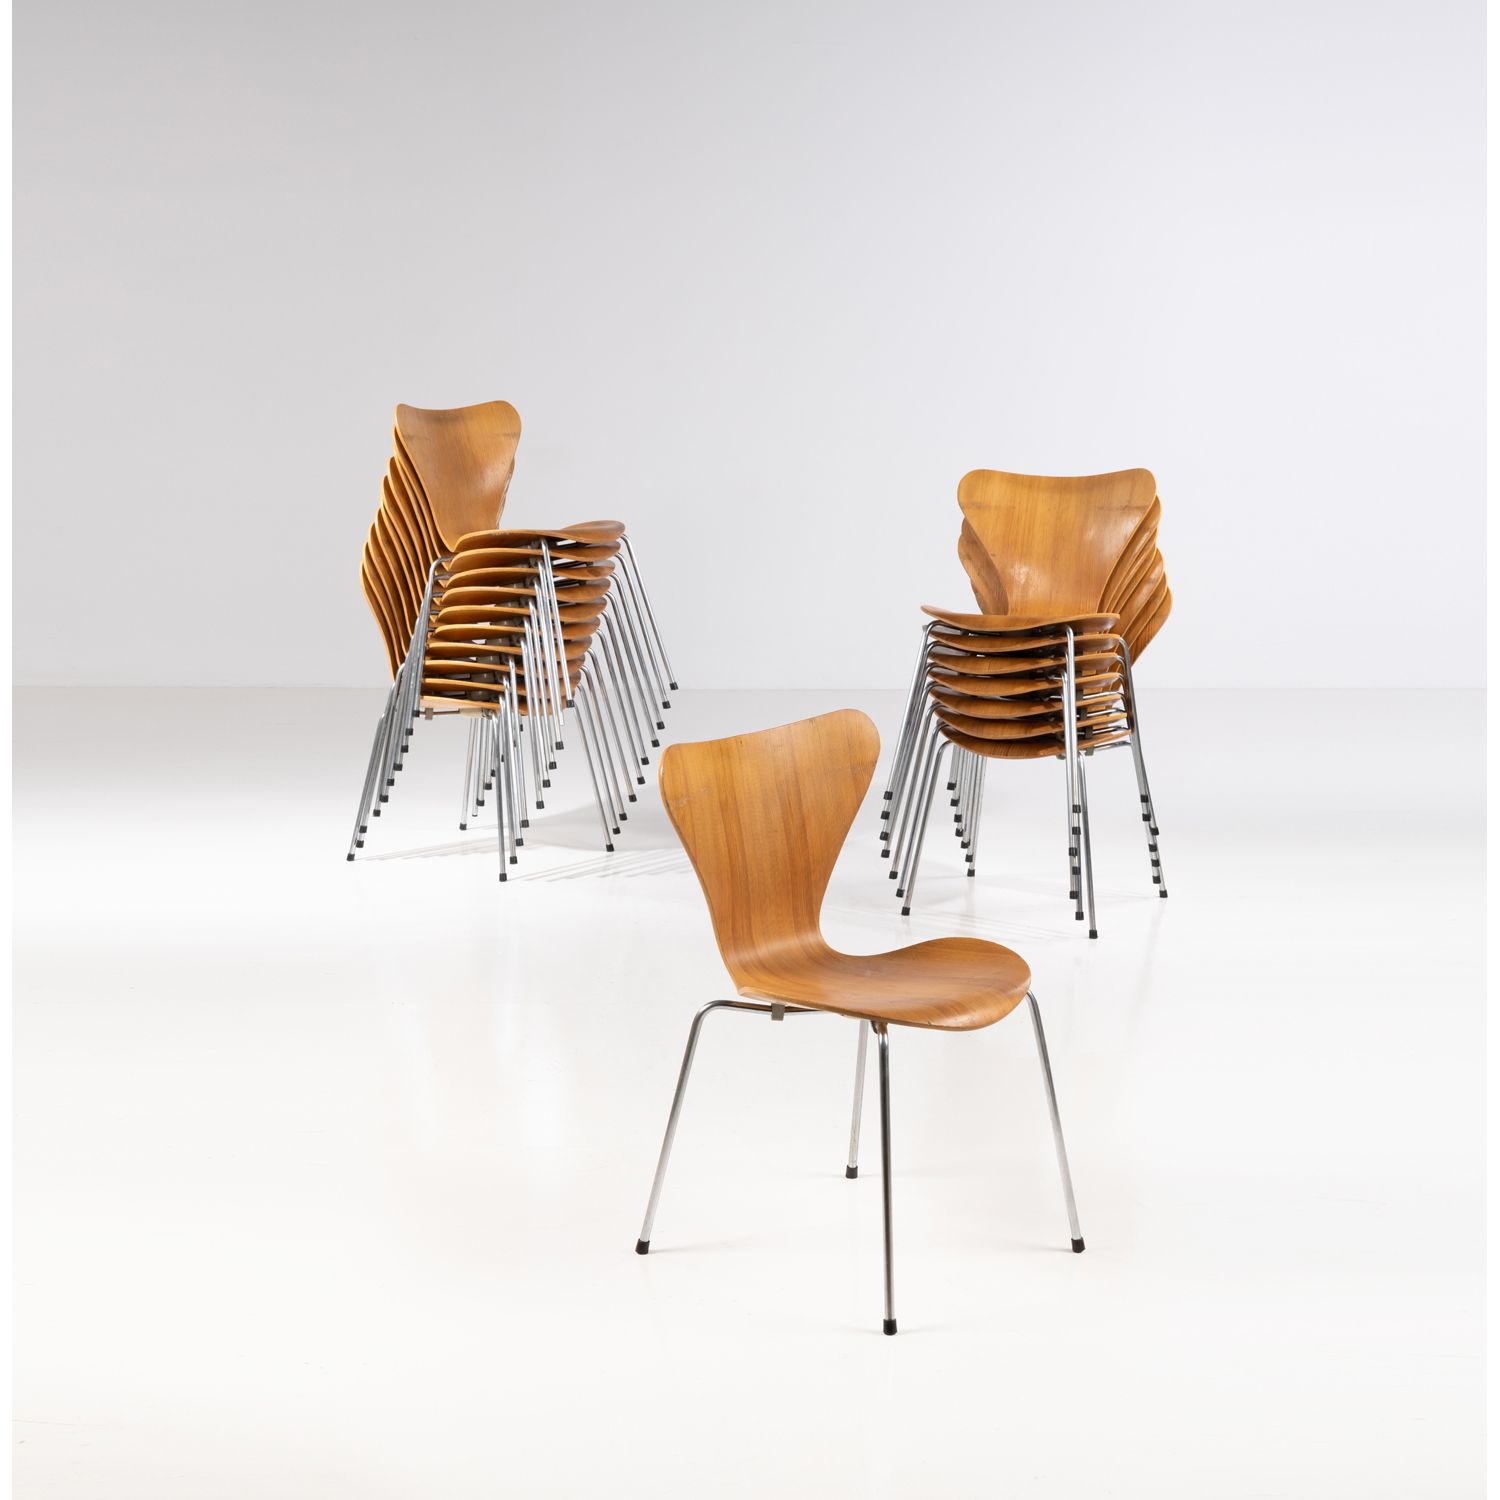 Null 阿纳-雅克布森(Arne Jacobsen) (1902-1971)

型号：3107

十八张椅子的套间

松木和铬钢

弗里茨-汉森版

座位下有&hellip;